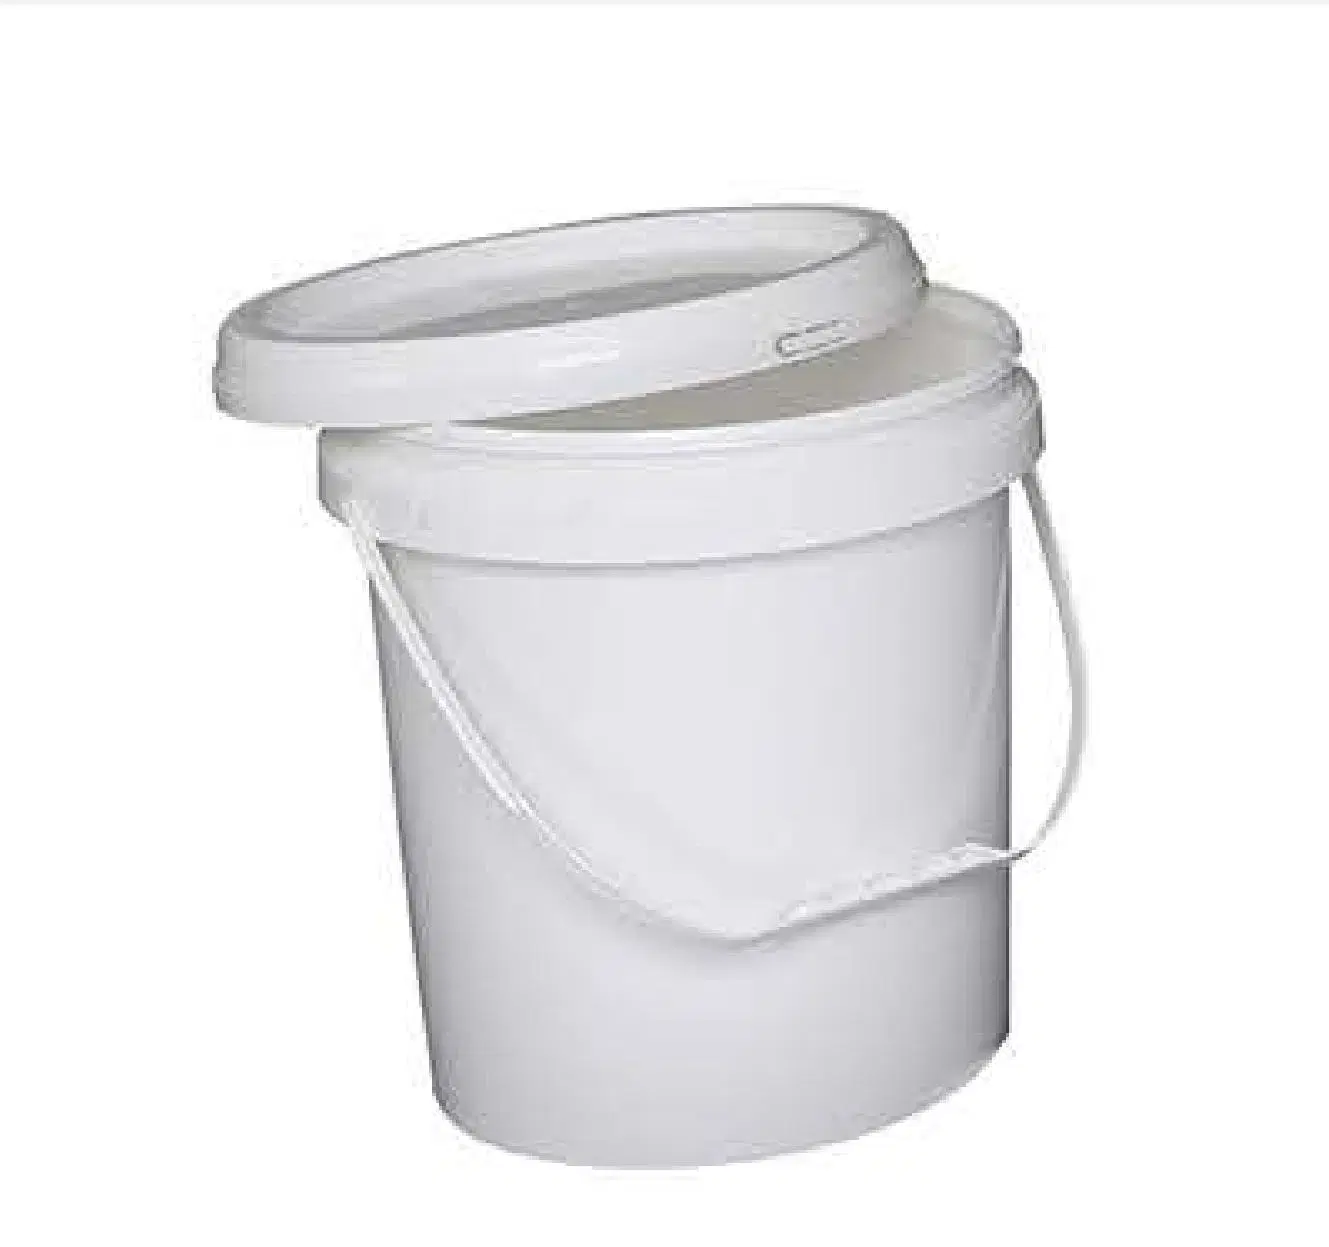 5 Gallon Food Grade Safe Paint Popcorn White Plastic Buckets С крышками обрабатывать Цена